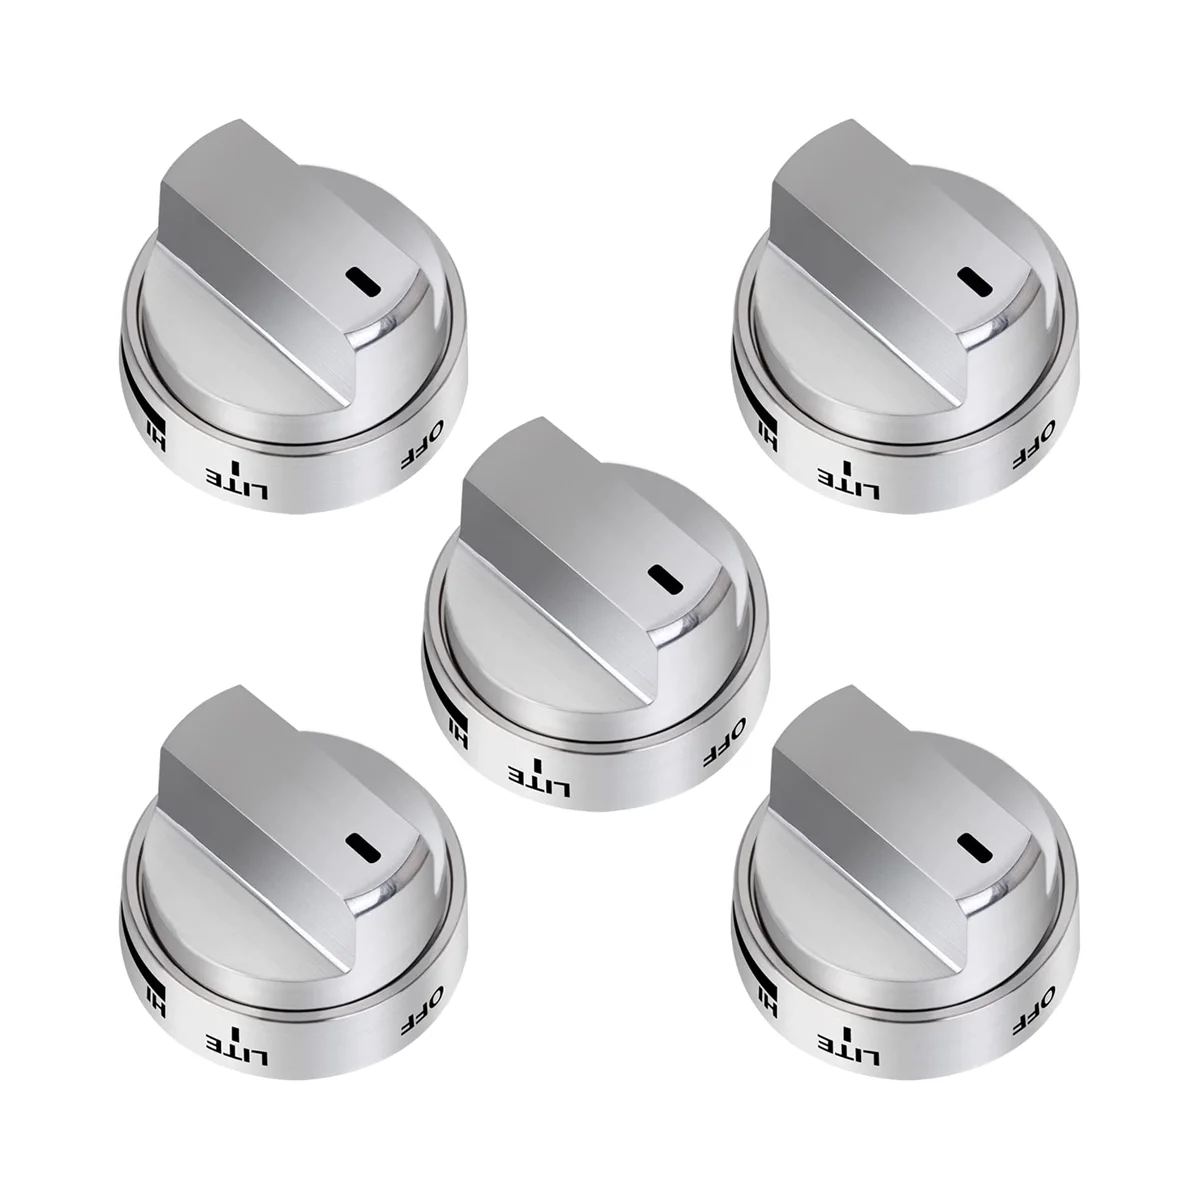 

5PCS AEZ73453509 Stove Knobs Burner Control Knobs for LG Gas Stove/Oven/Range Knobs Replace for AEZ72909008,AP5669773